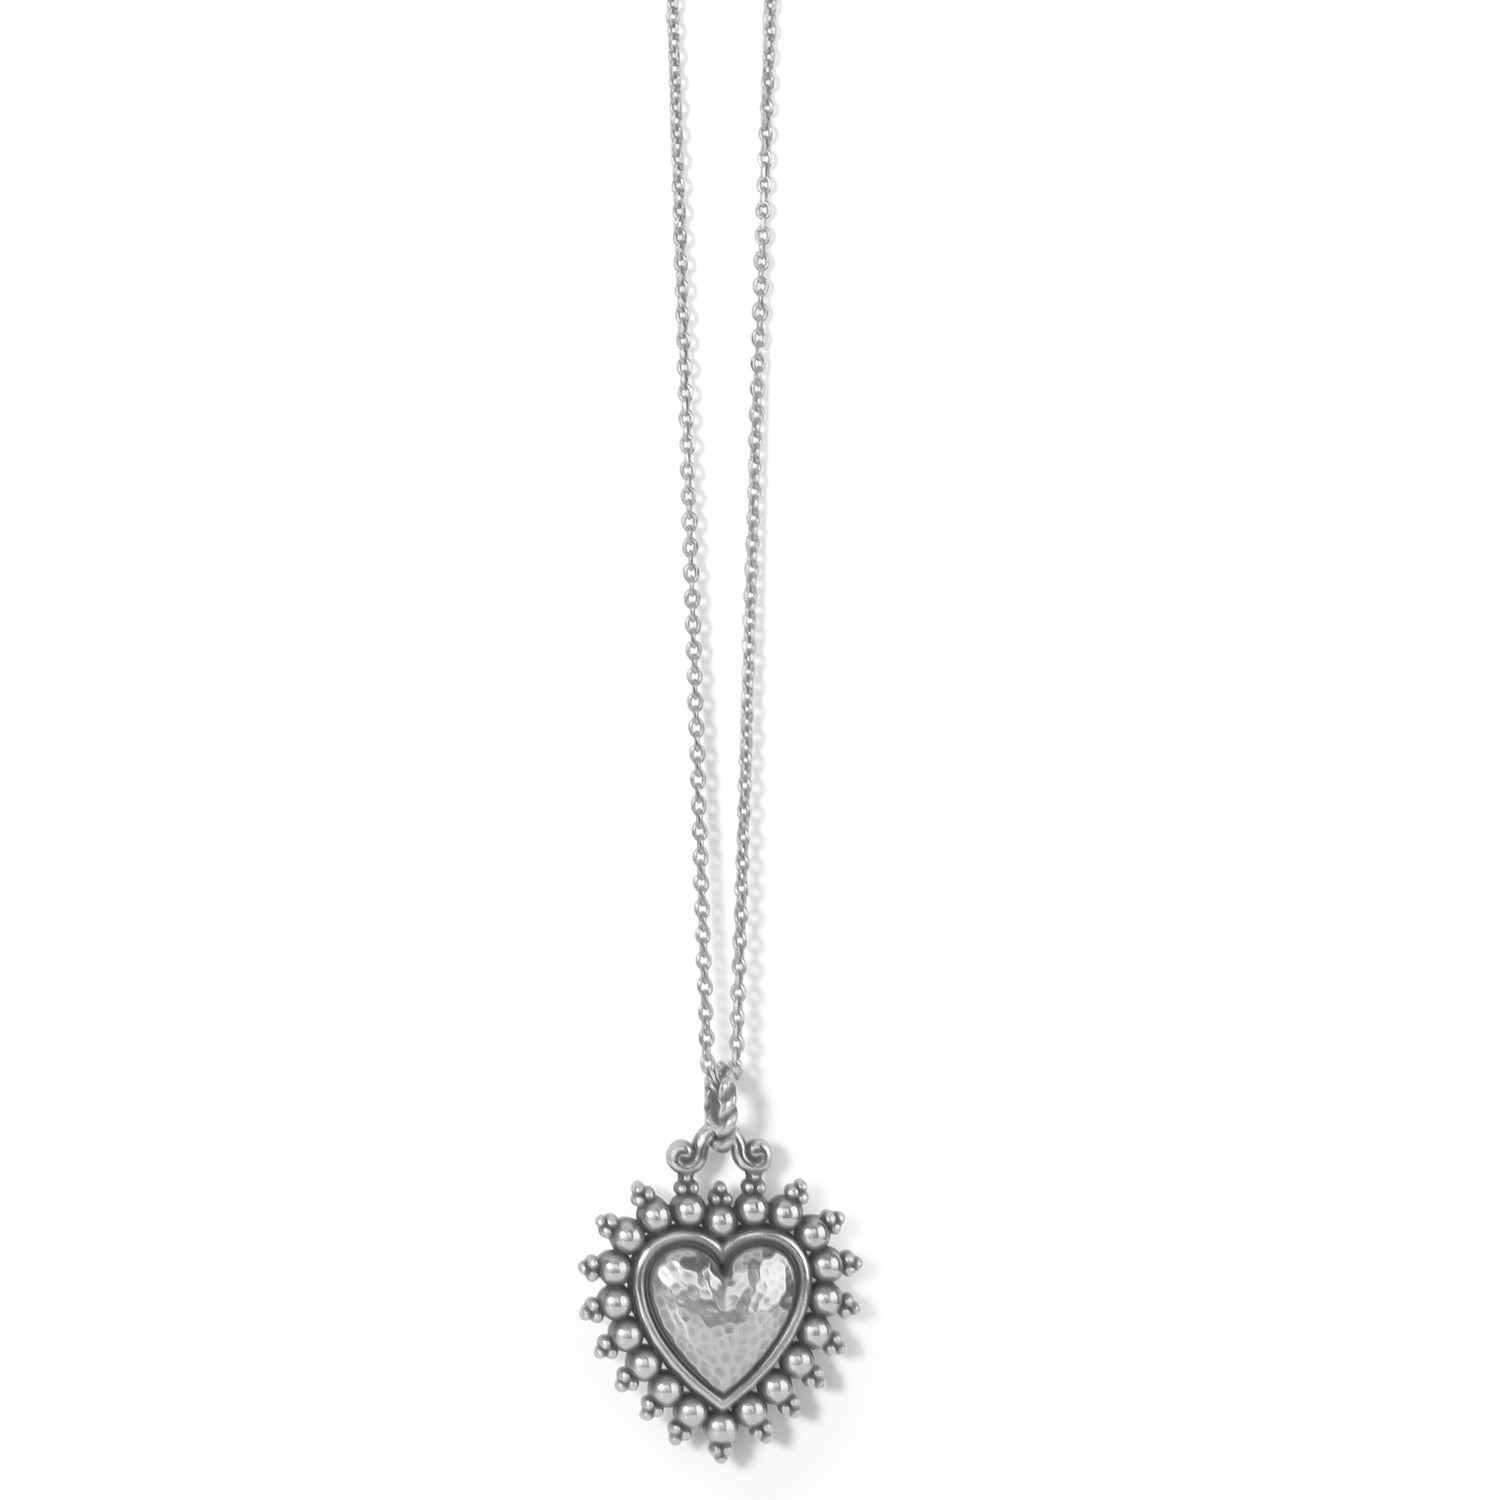 Telluride Small Heart Necklace